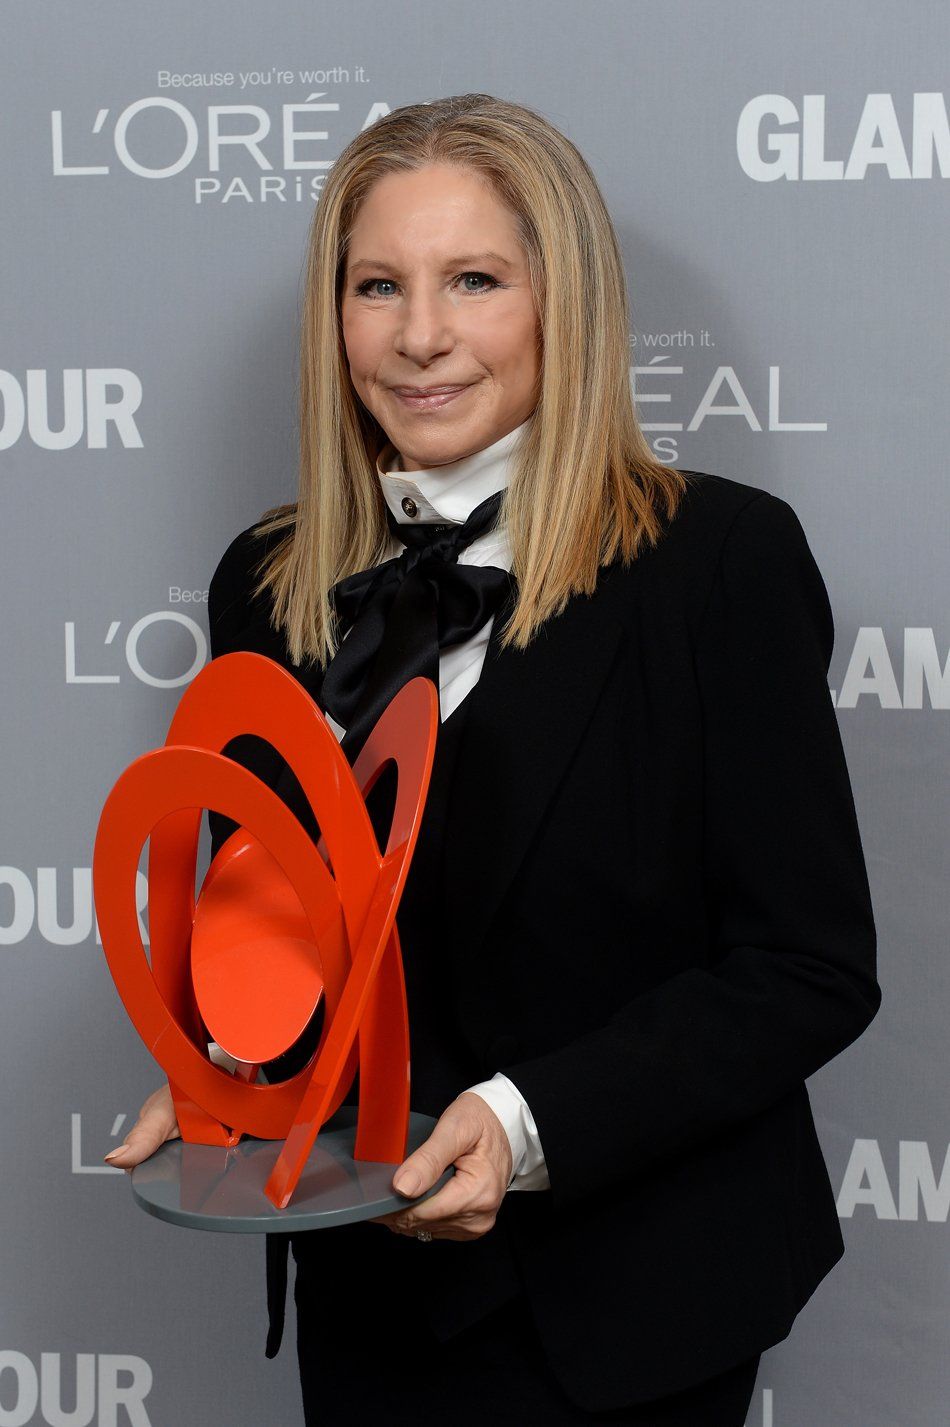 Streisand holds the Glamour Magazine award, 2013.